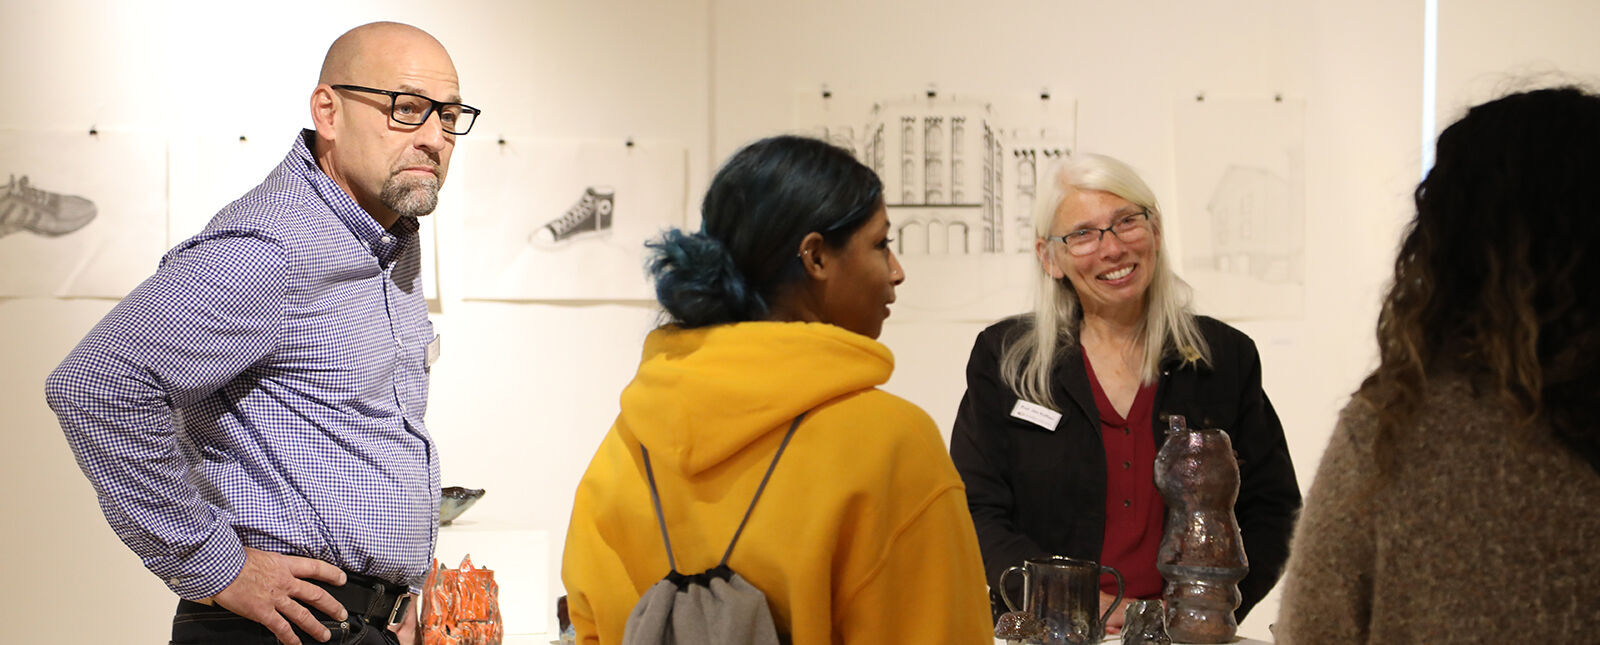 Art faculty members speak with students in the George Waters Gallery